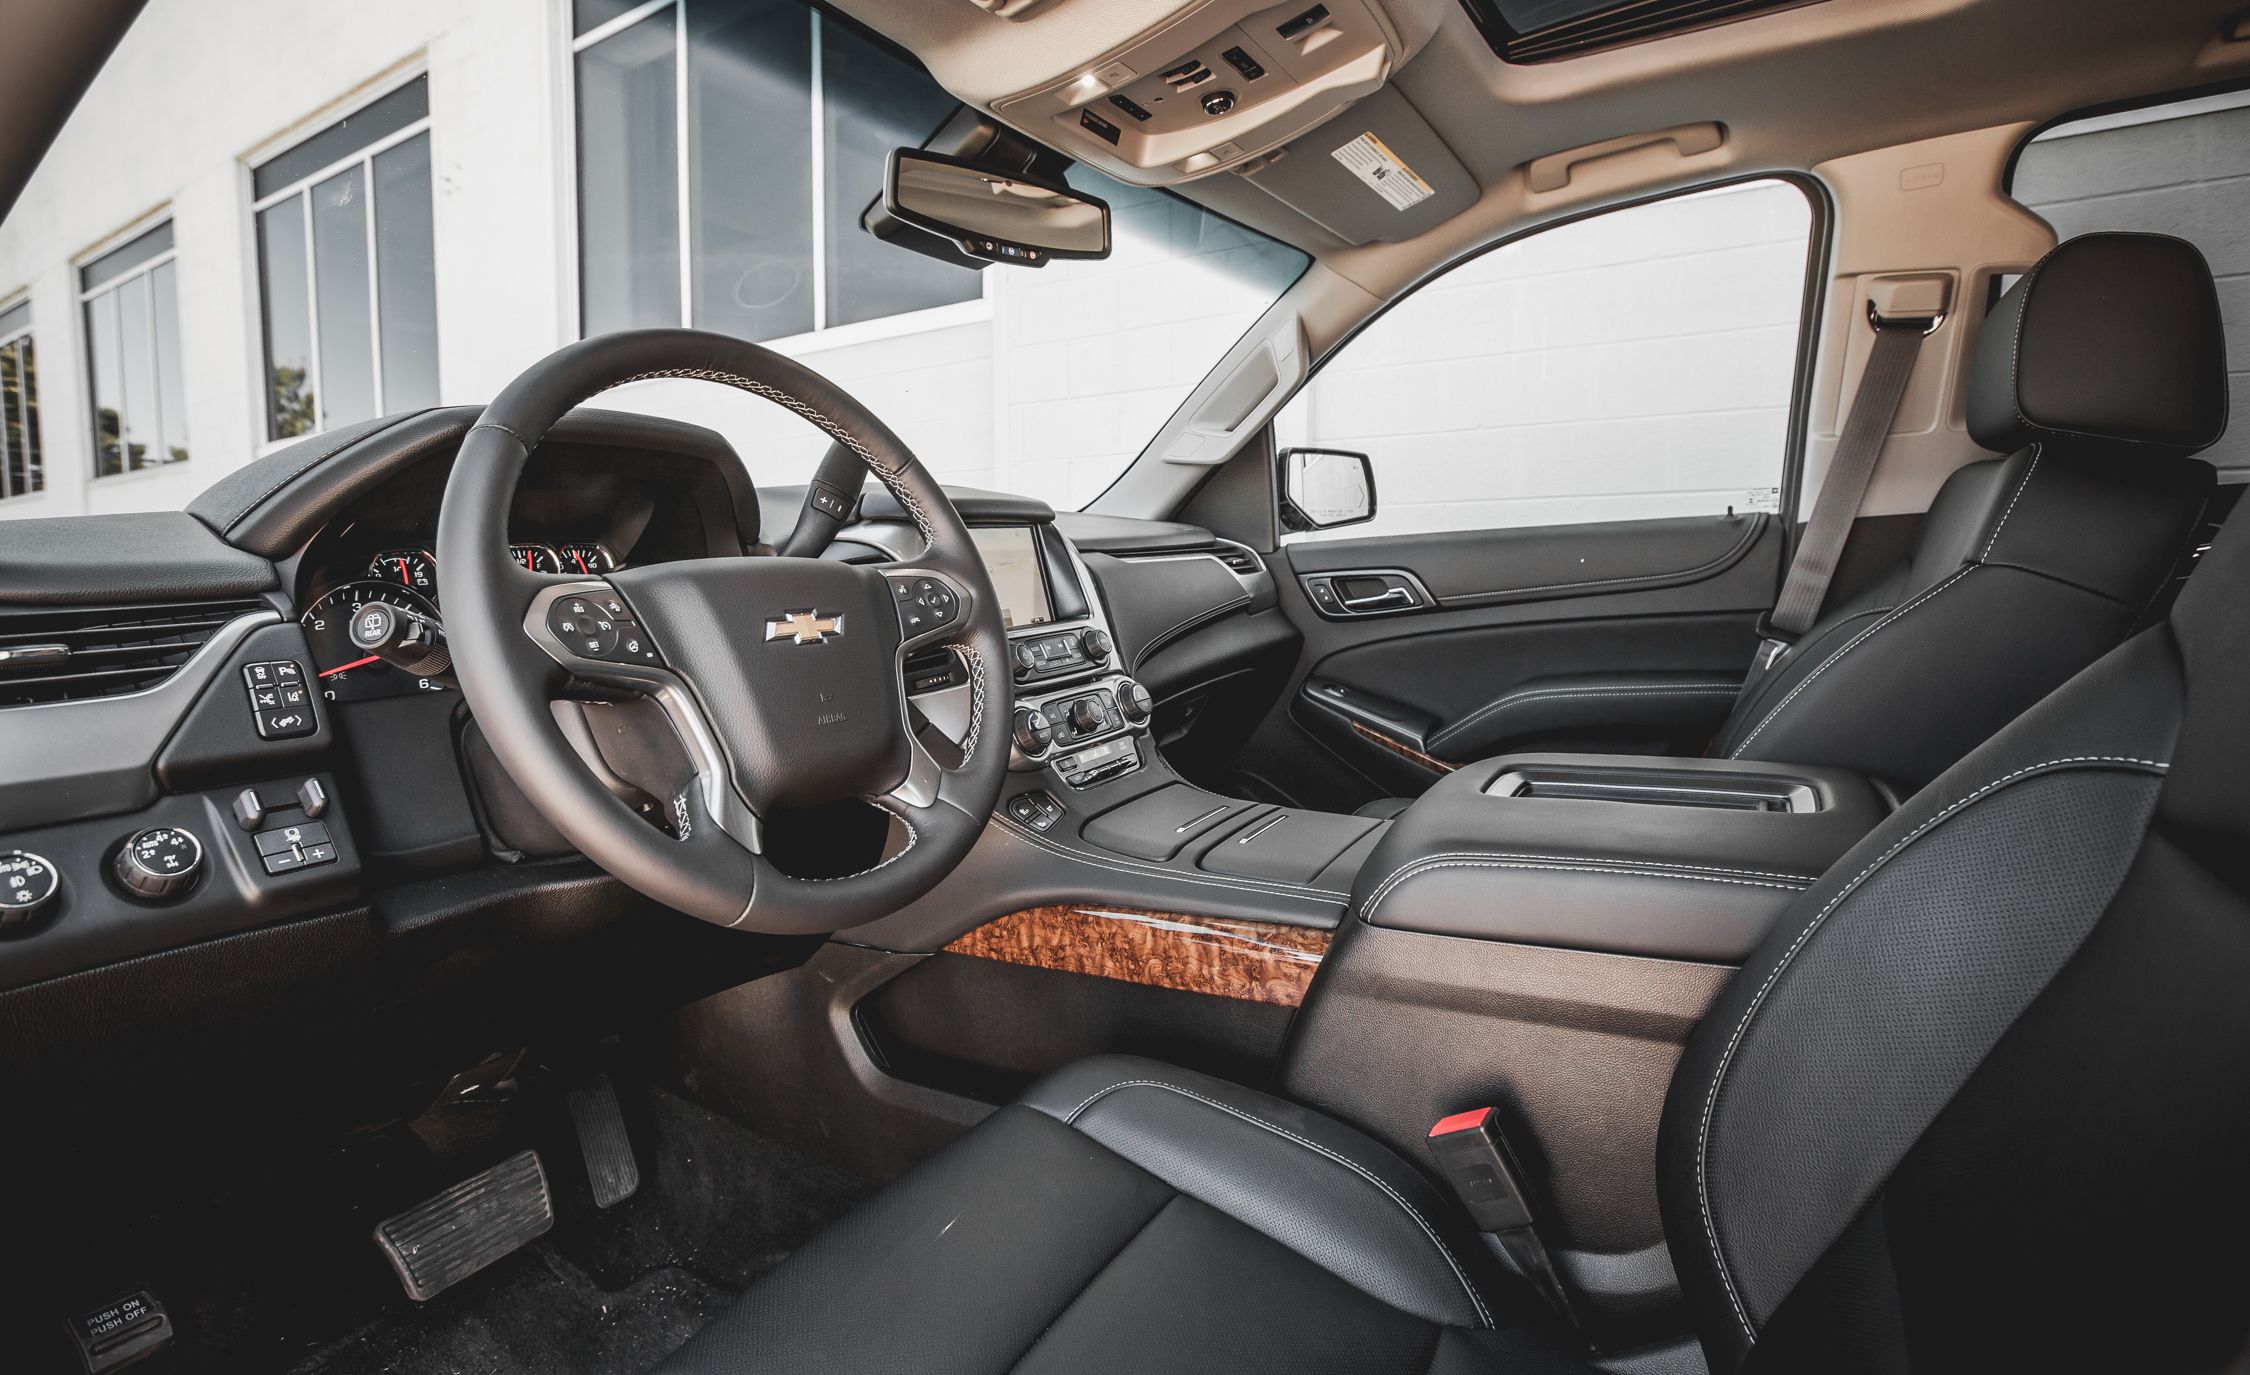 2015 Chevrolet Suburban Ltz Interior (View 18 of 33)